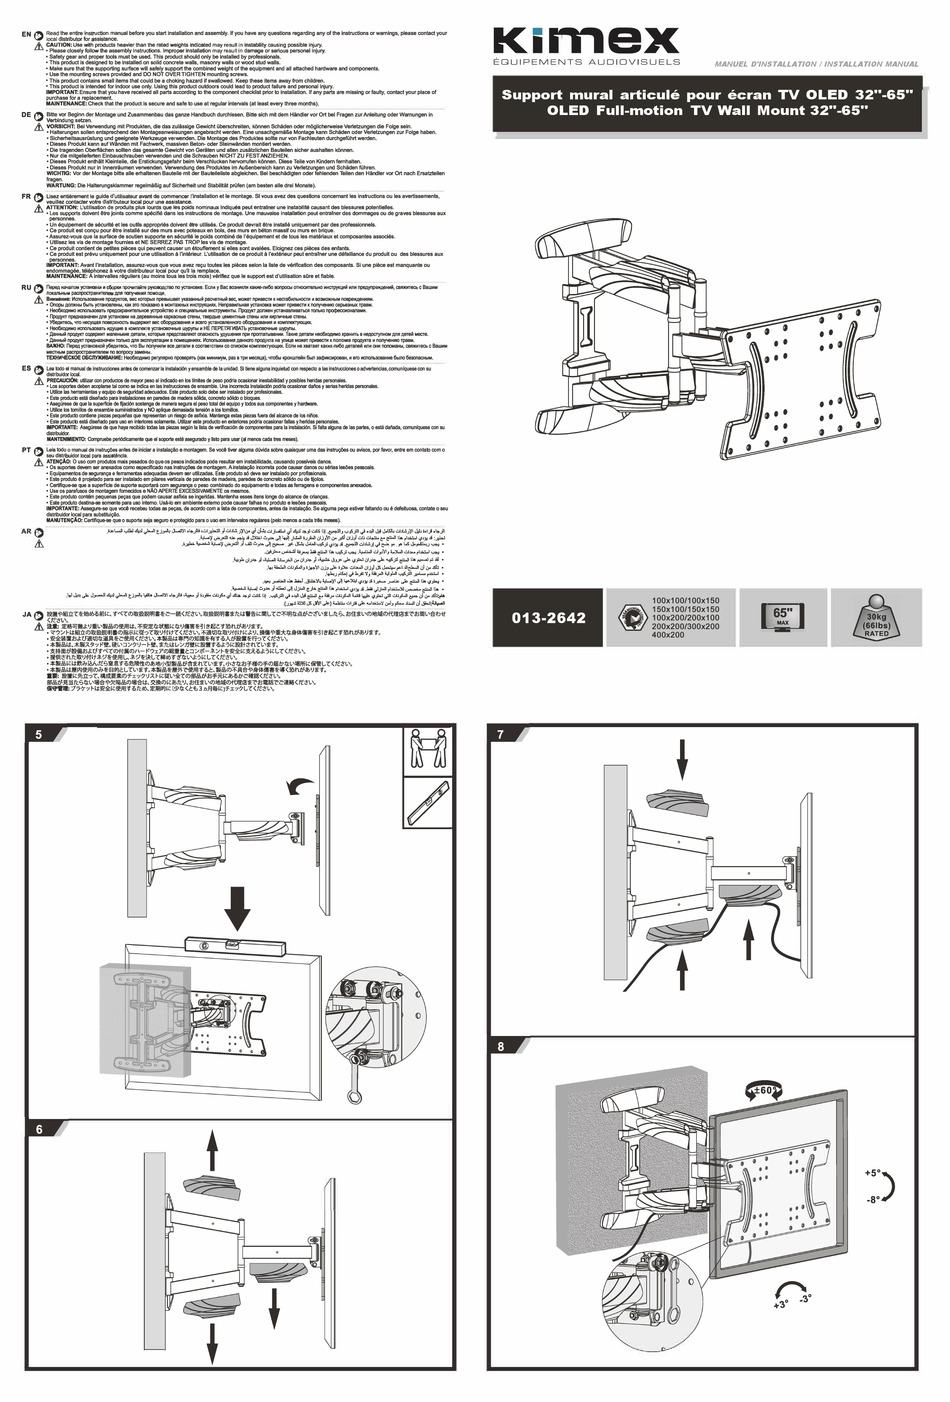 kimex-013-2642-installation-manual-pdf-download-manualslib